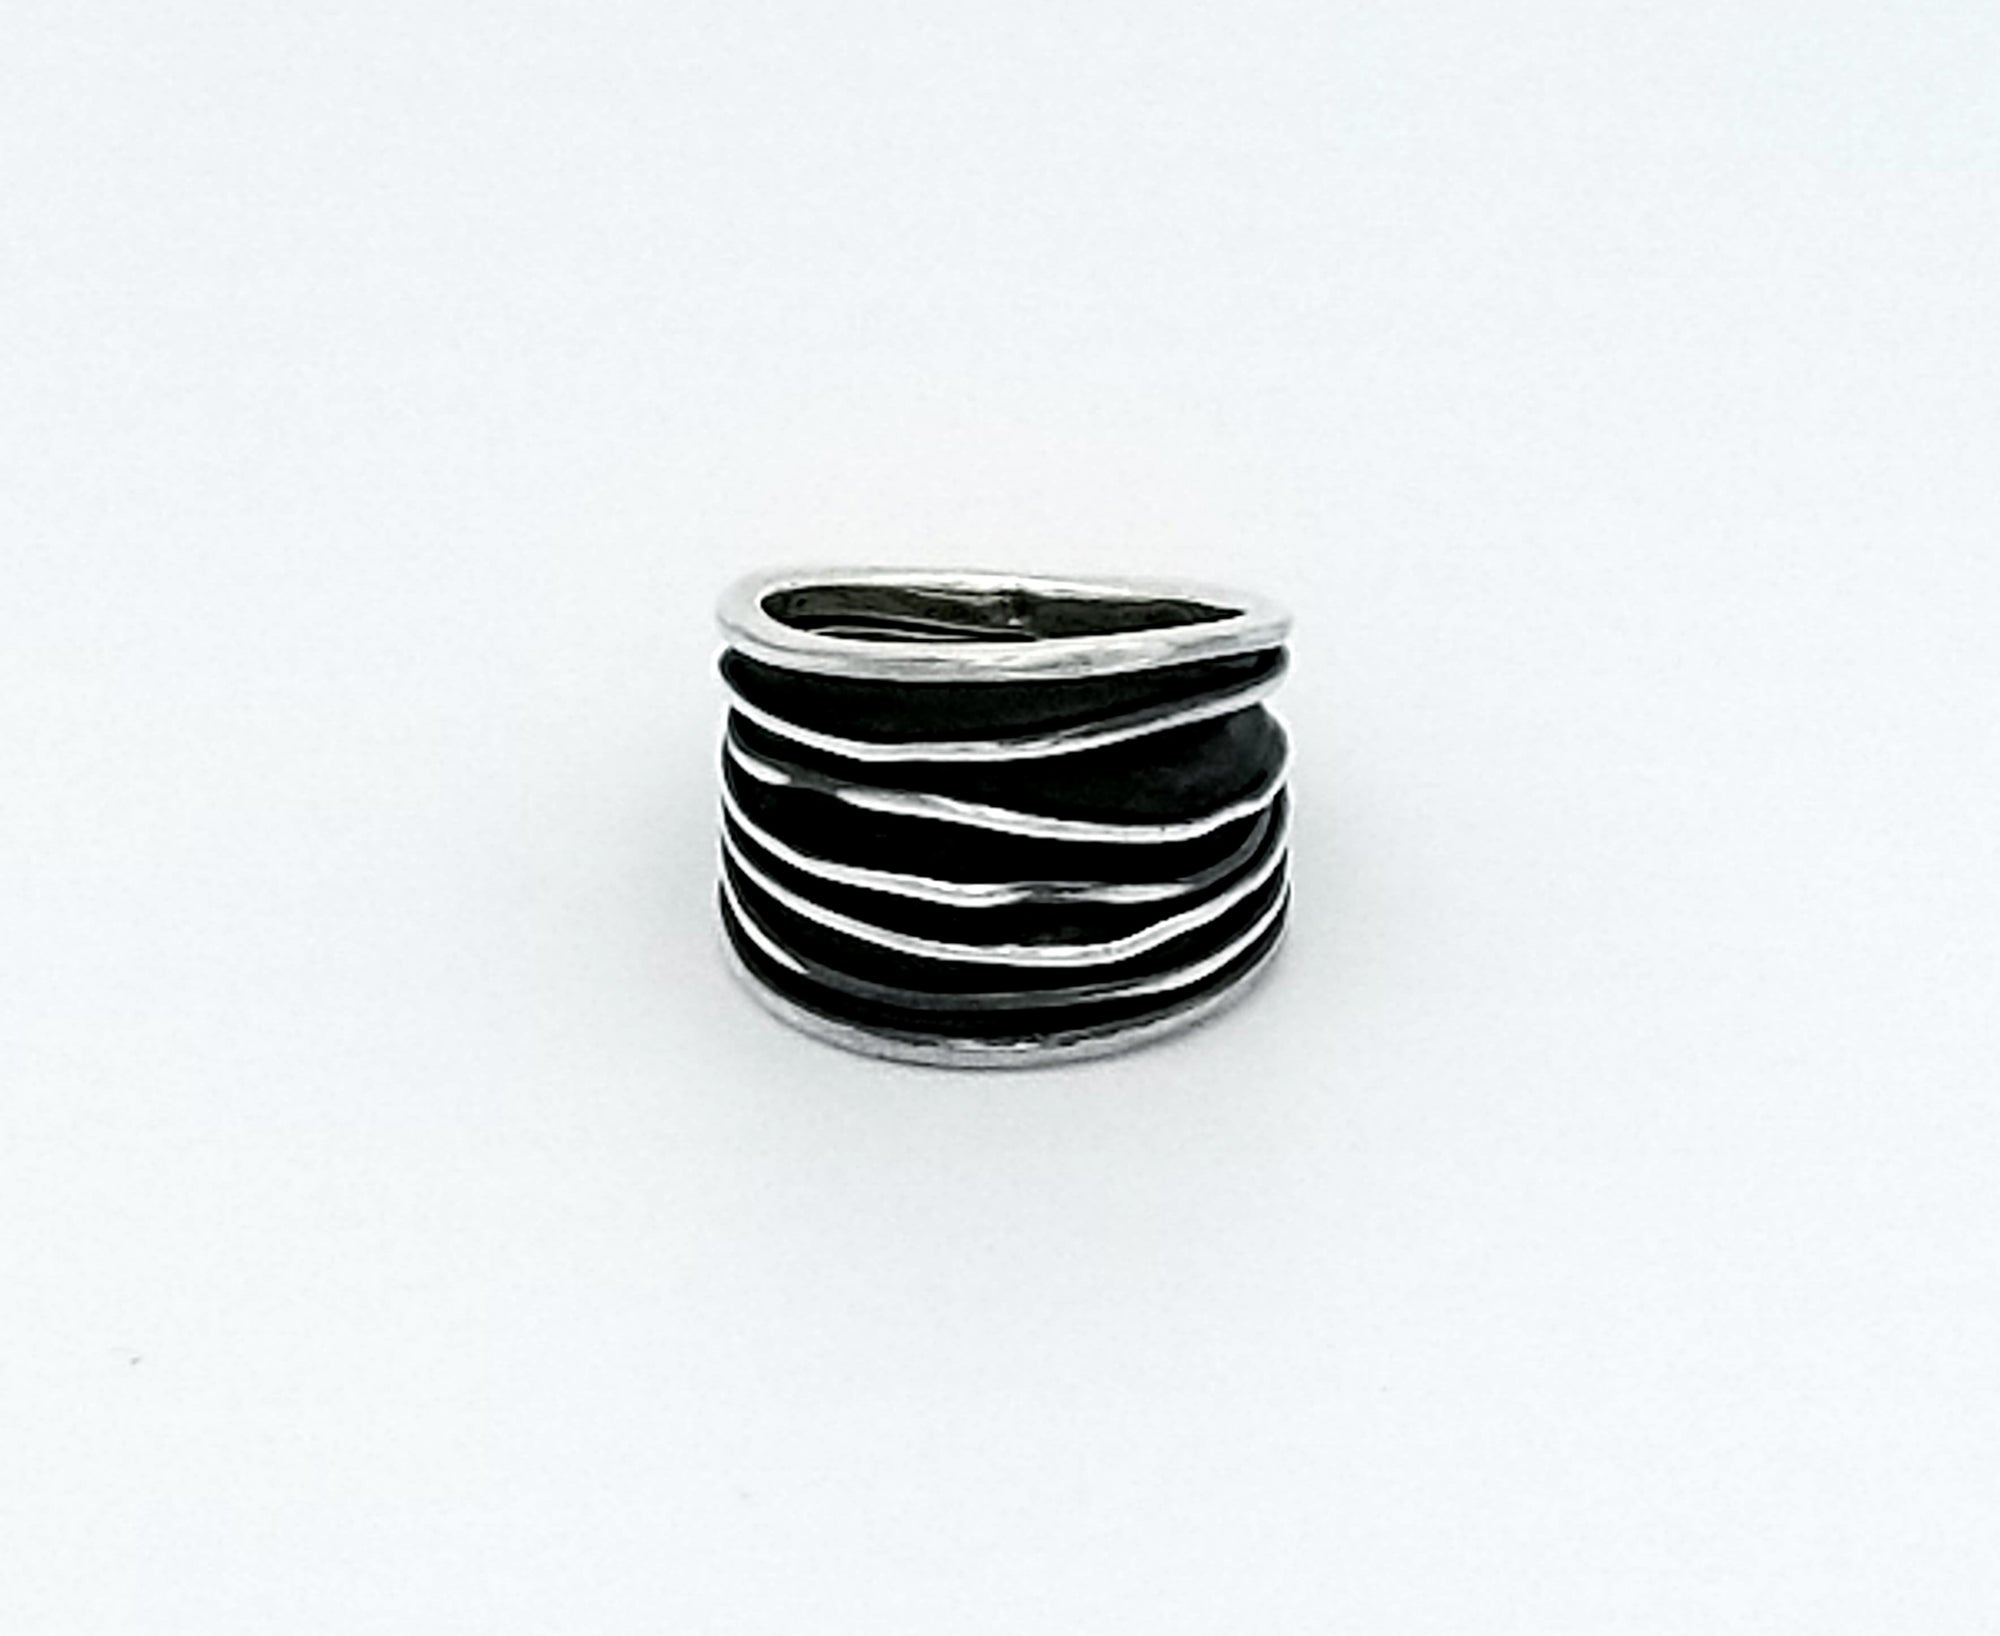 Wrinkled Dark Silver Ring